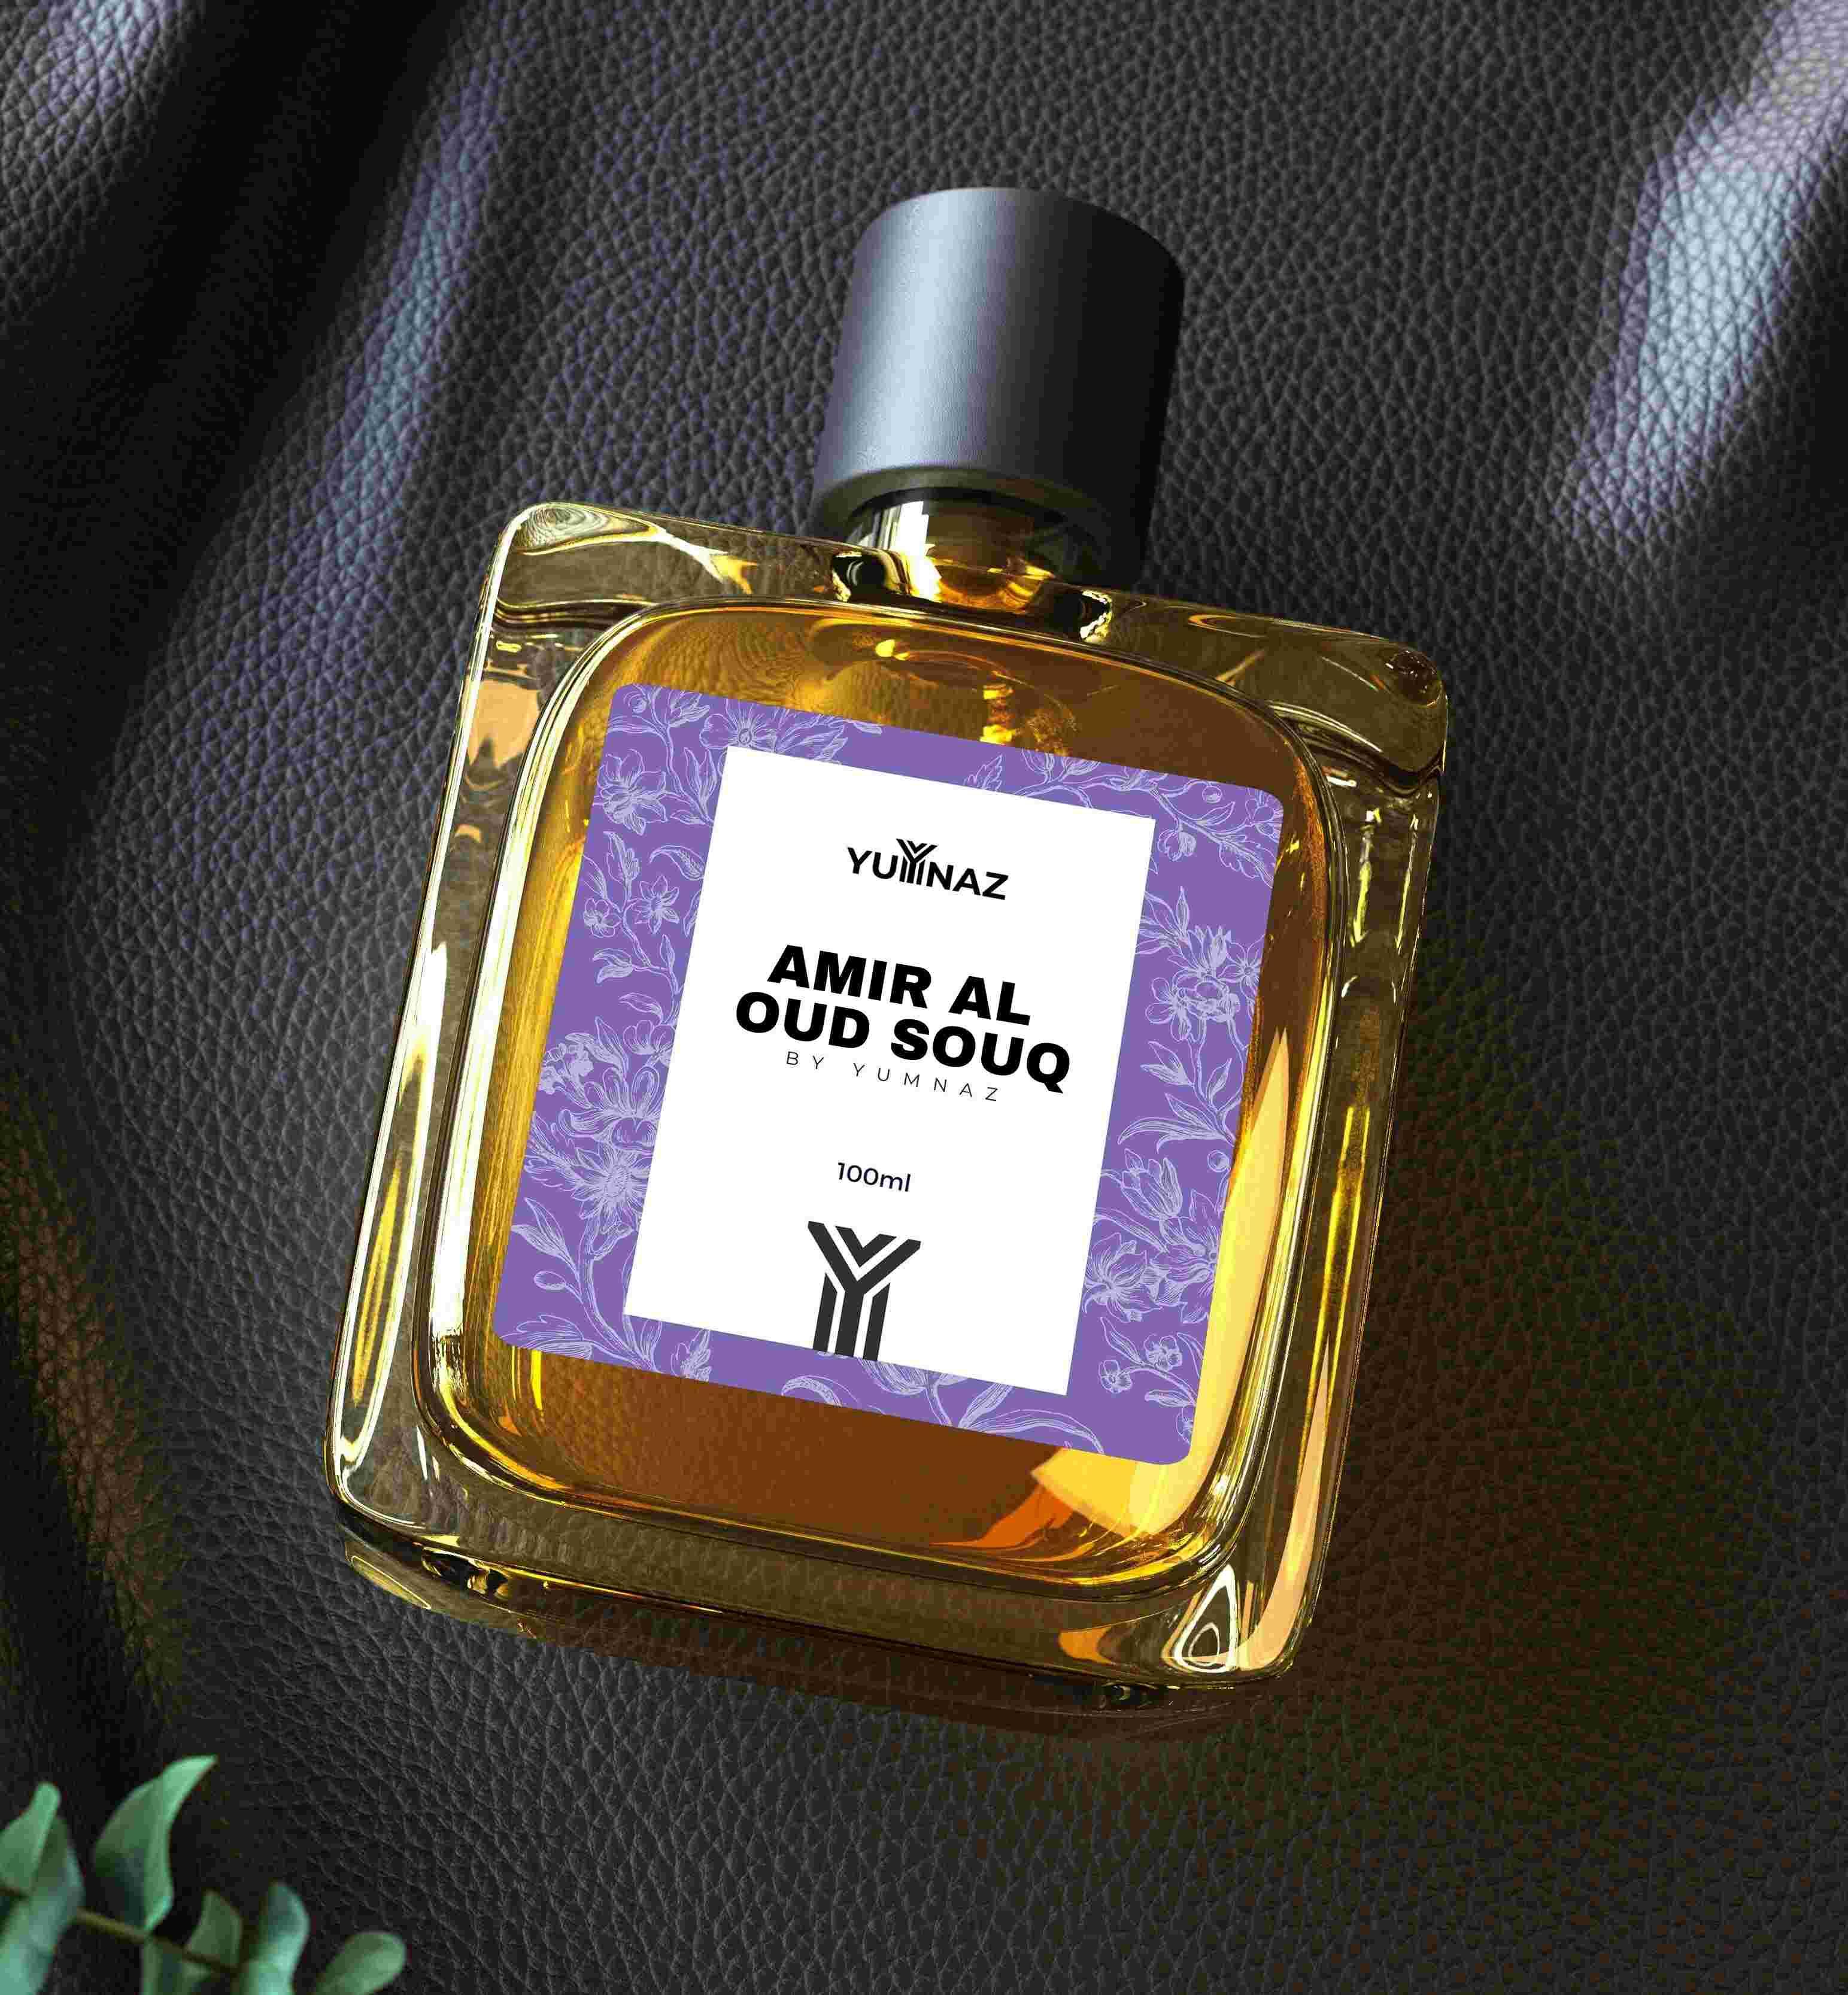 Amir Al Oud Souq Perfume Price in Pakistan